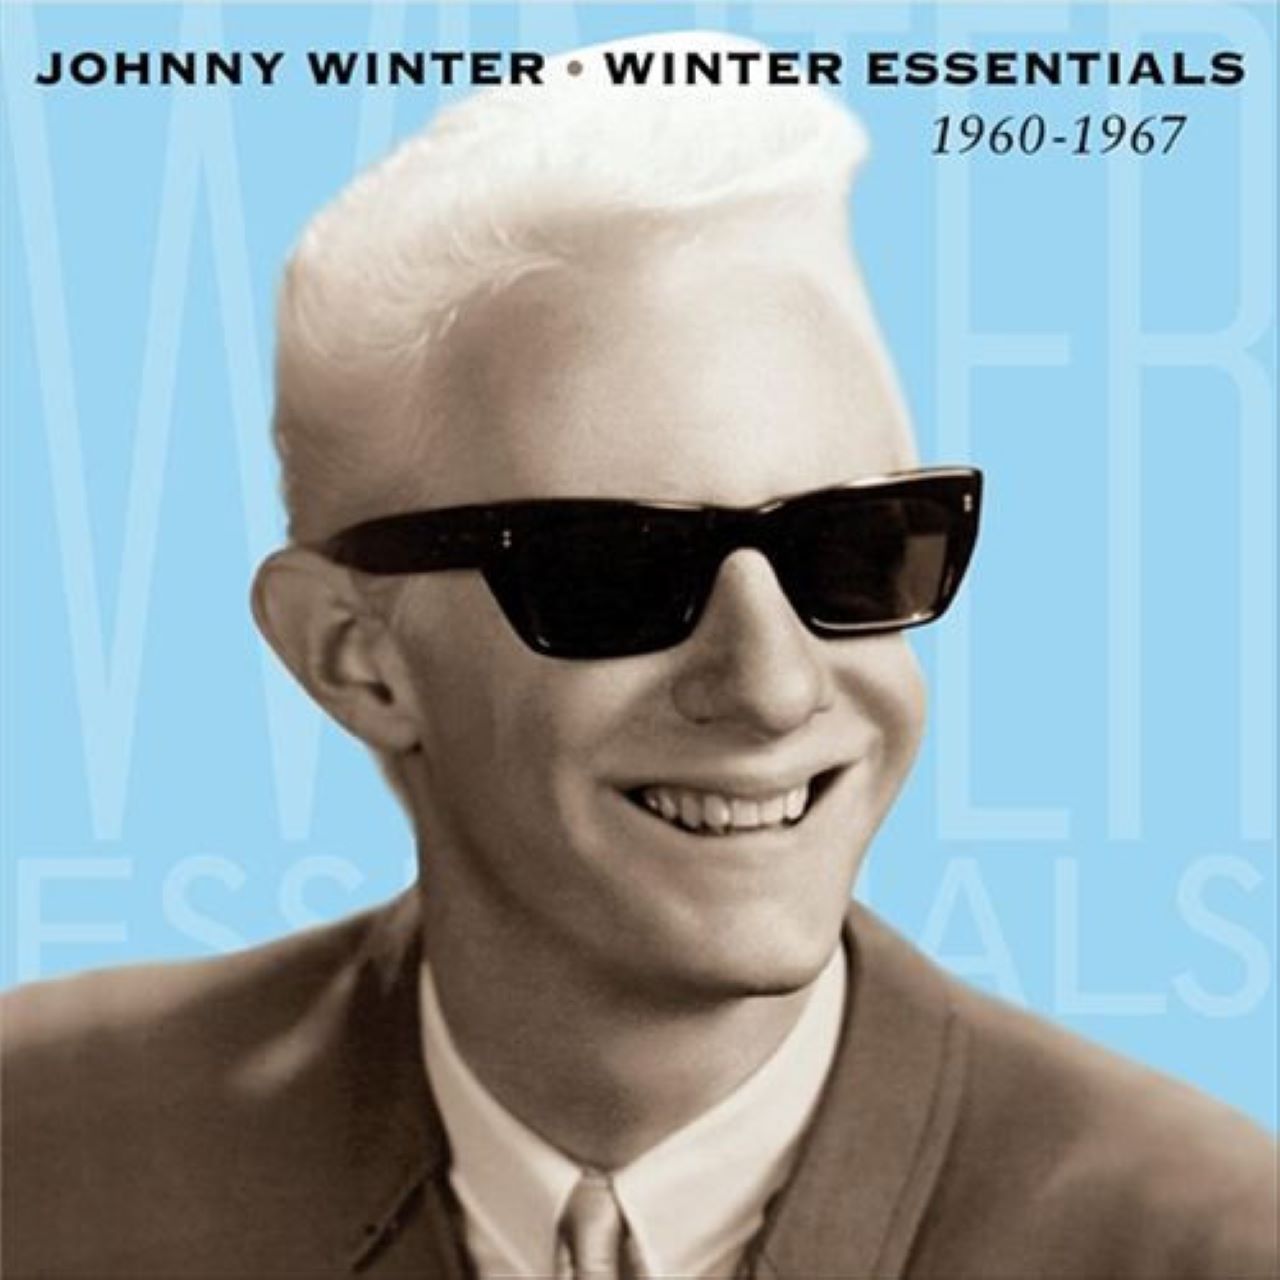 Johnny Winter - Winter Essentials 1960-67 cover album